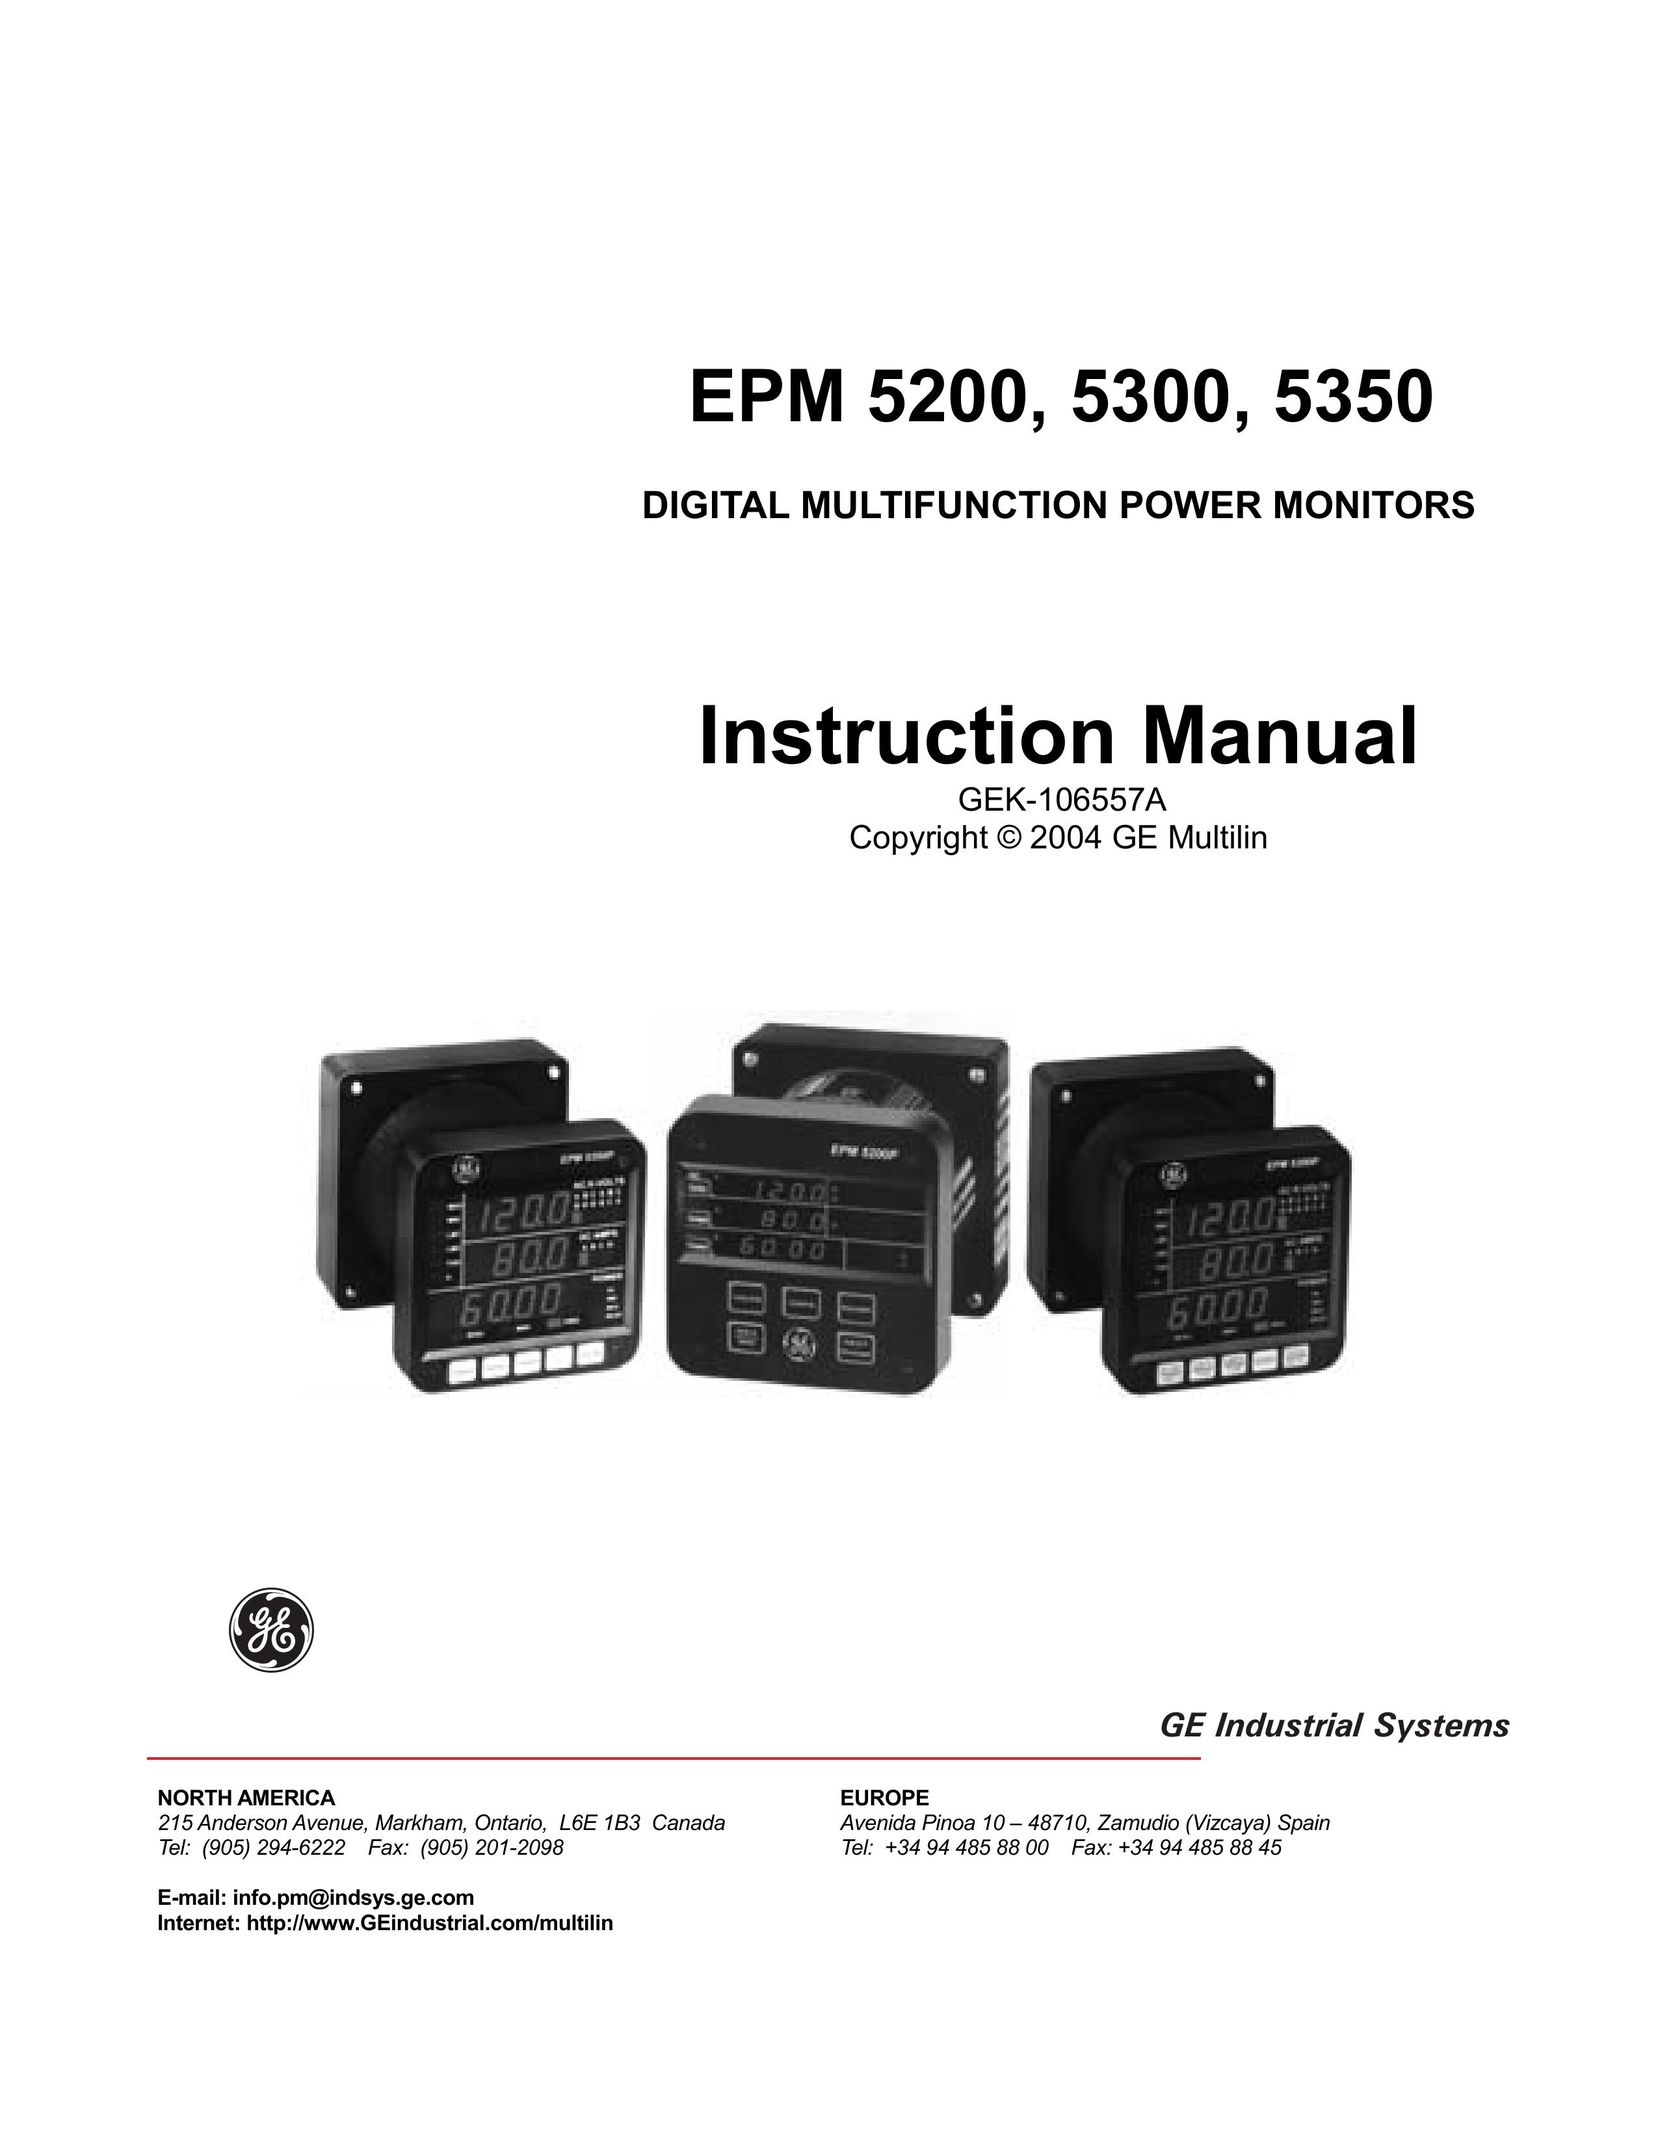 GE EPM 5350 Computer Monitor User Manual